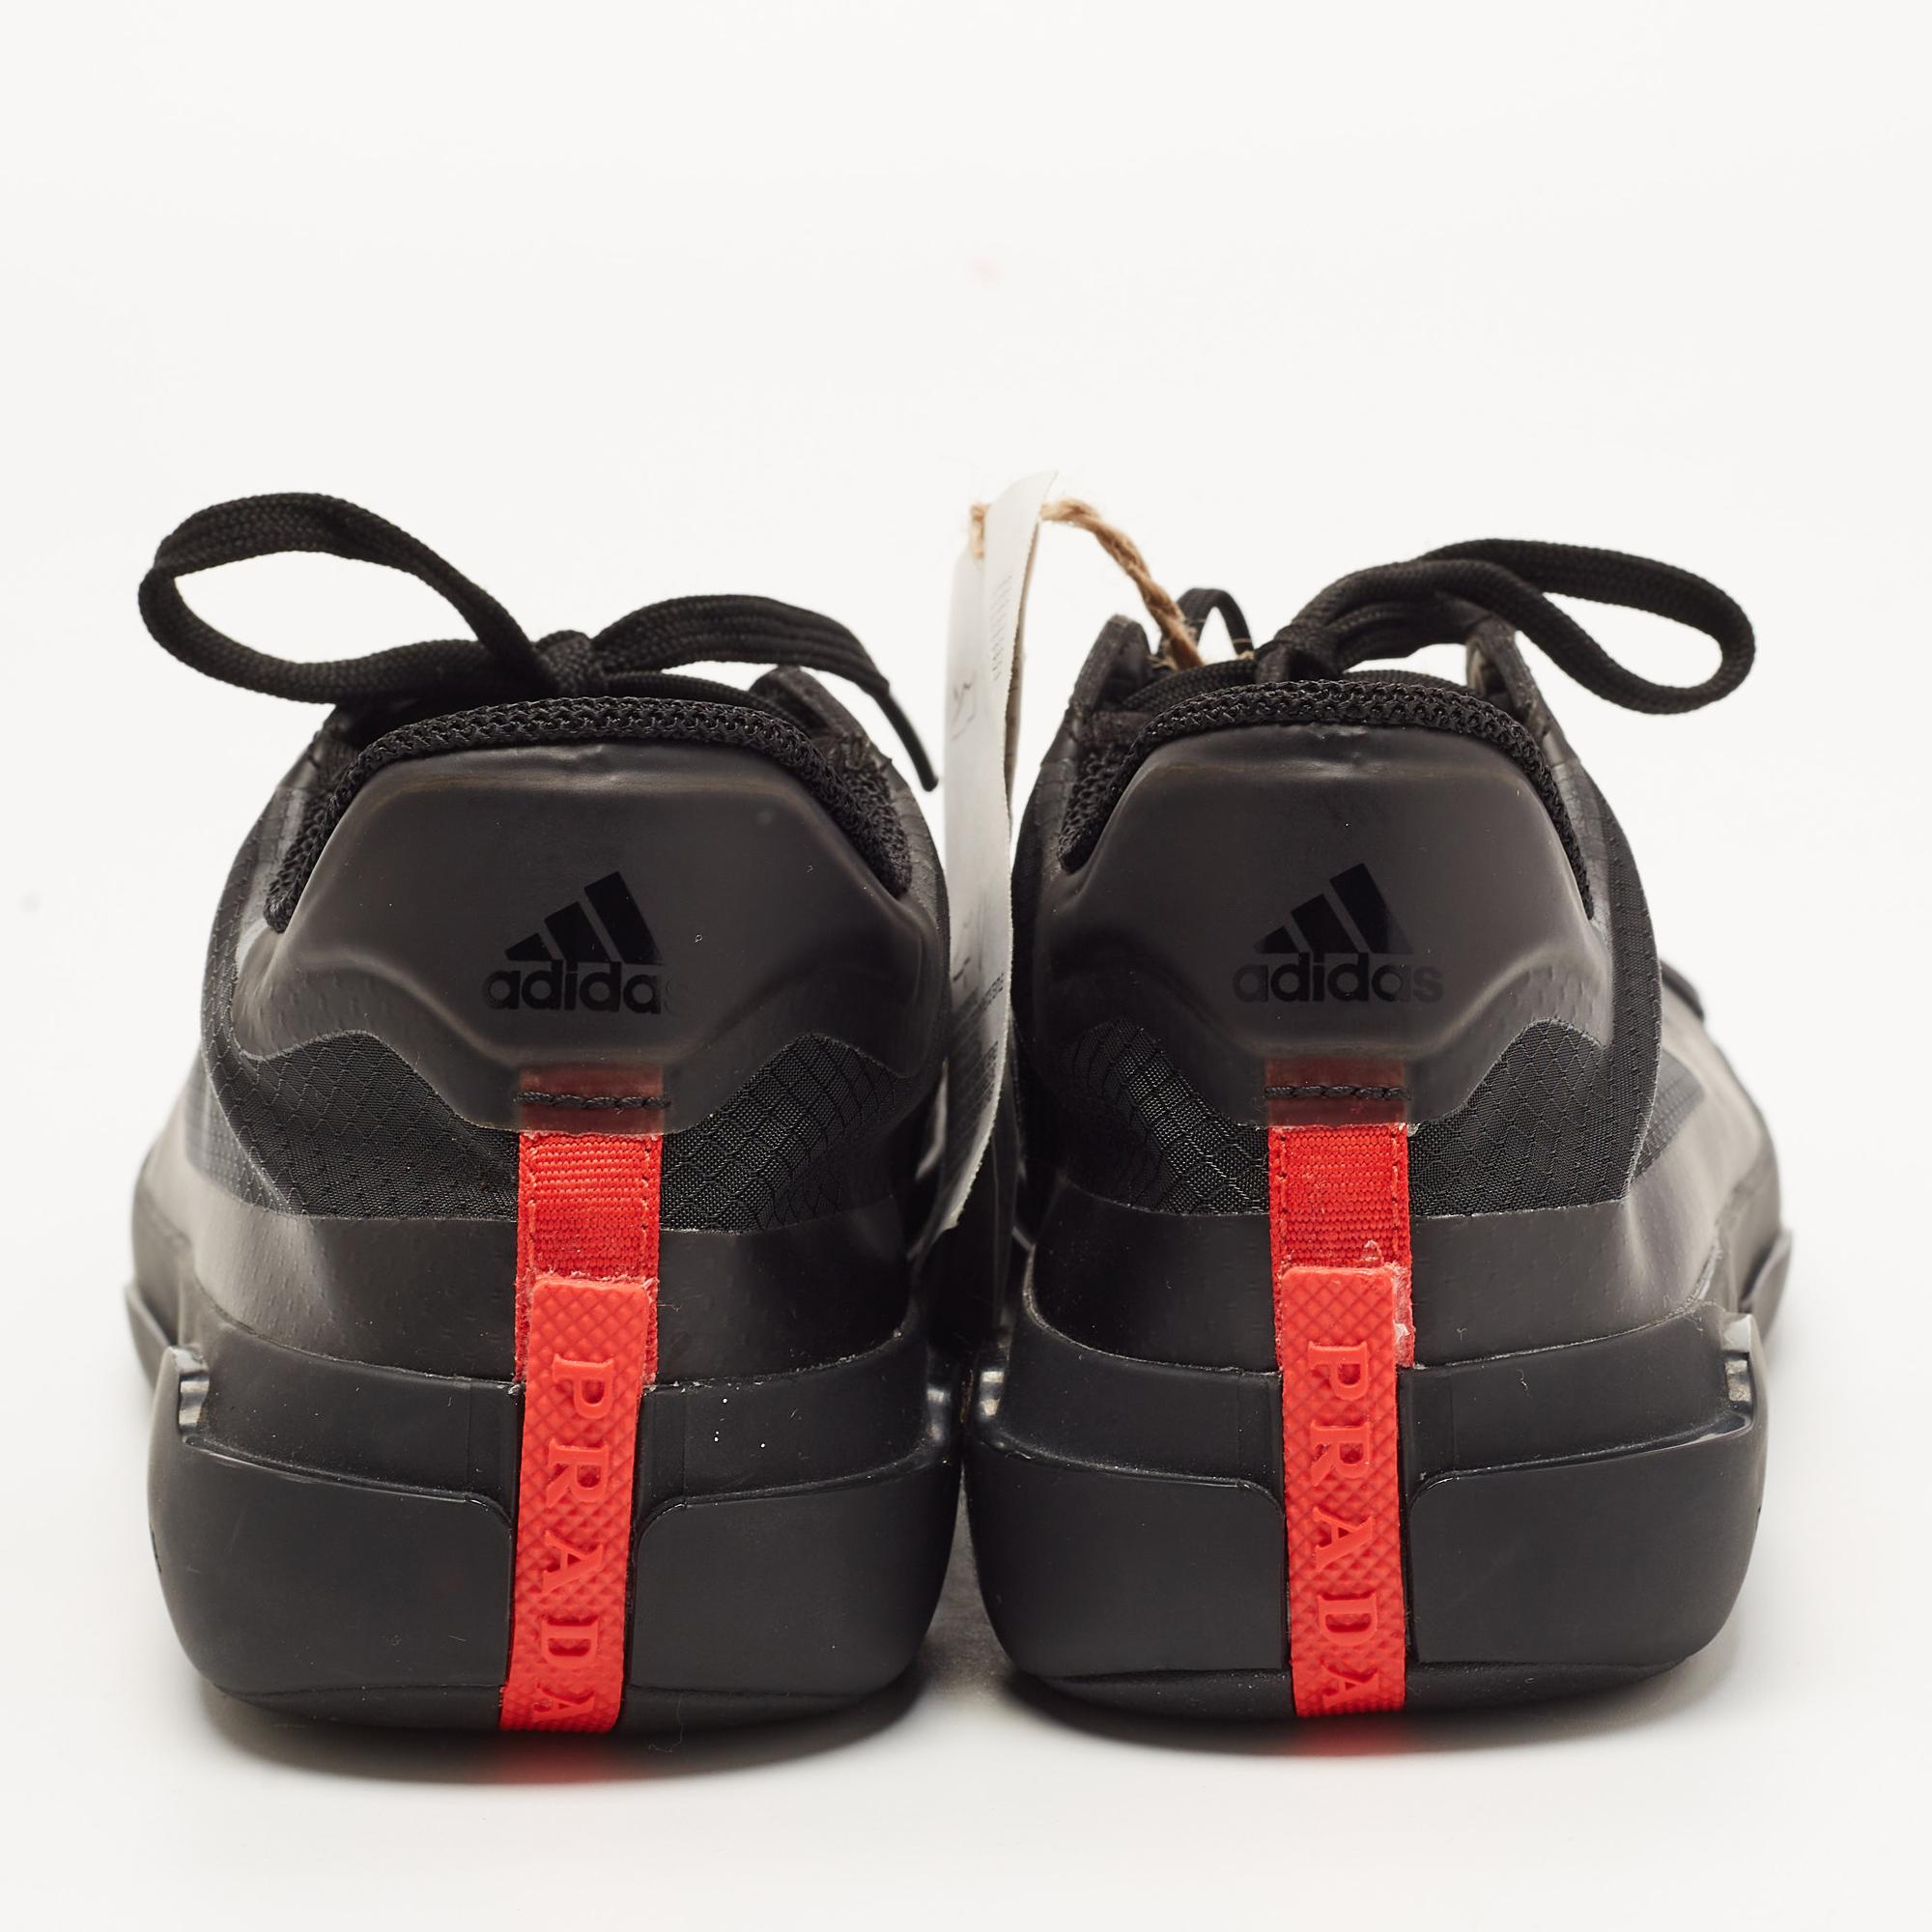 Adidas x Prada Black Mesh A+P Luna Sneakers Size 36 2/3 For Sale 3